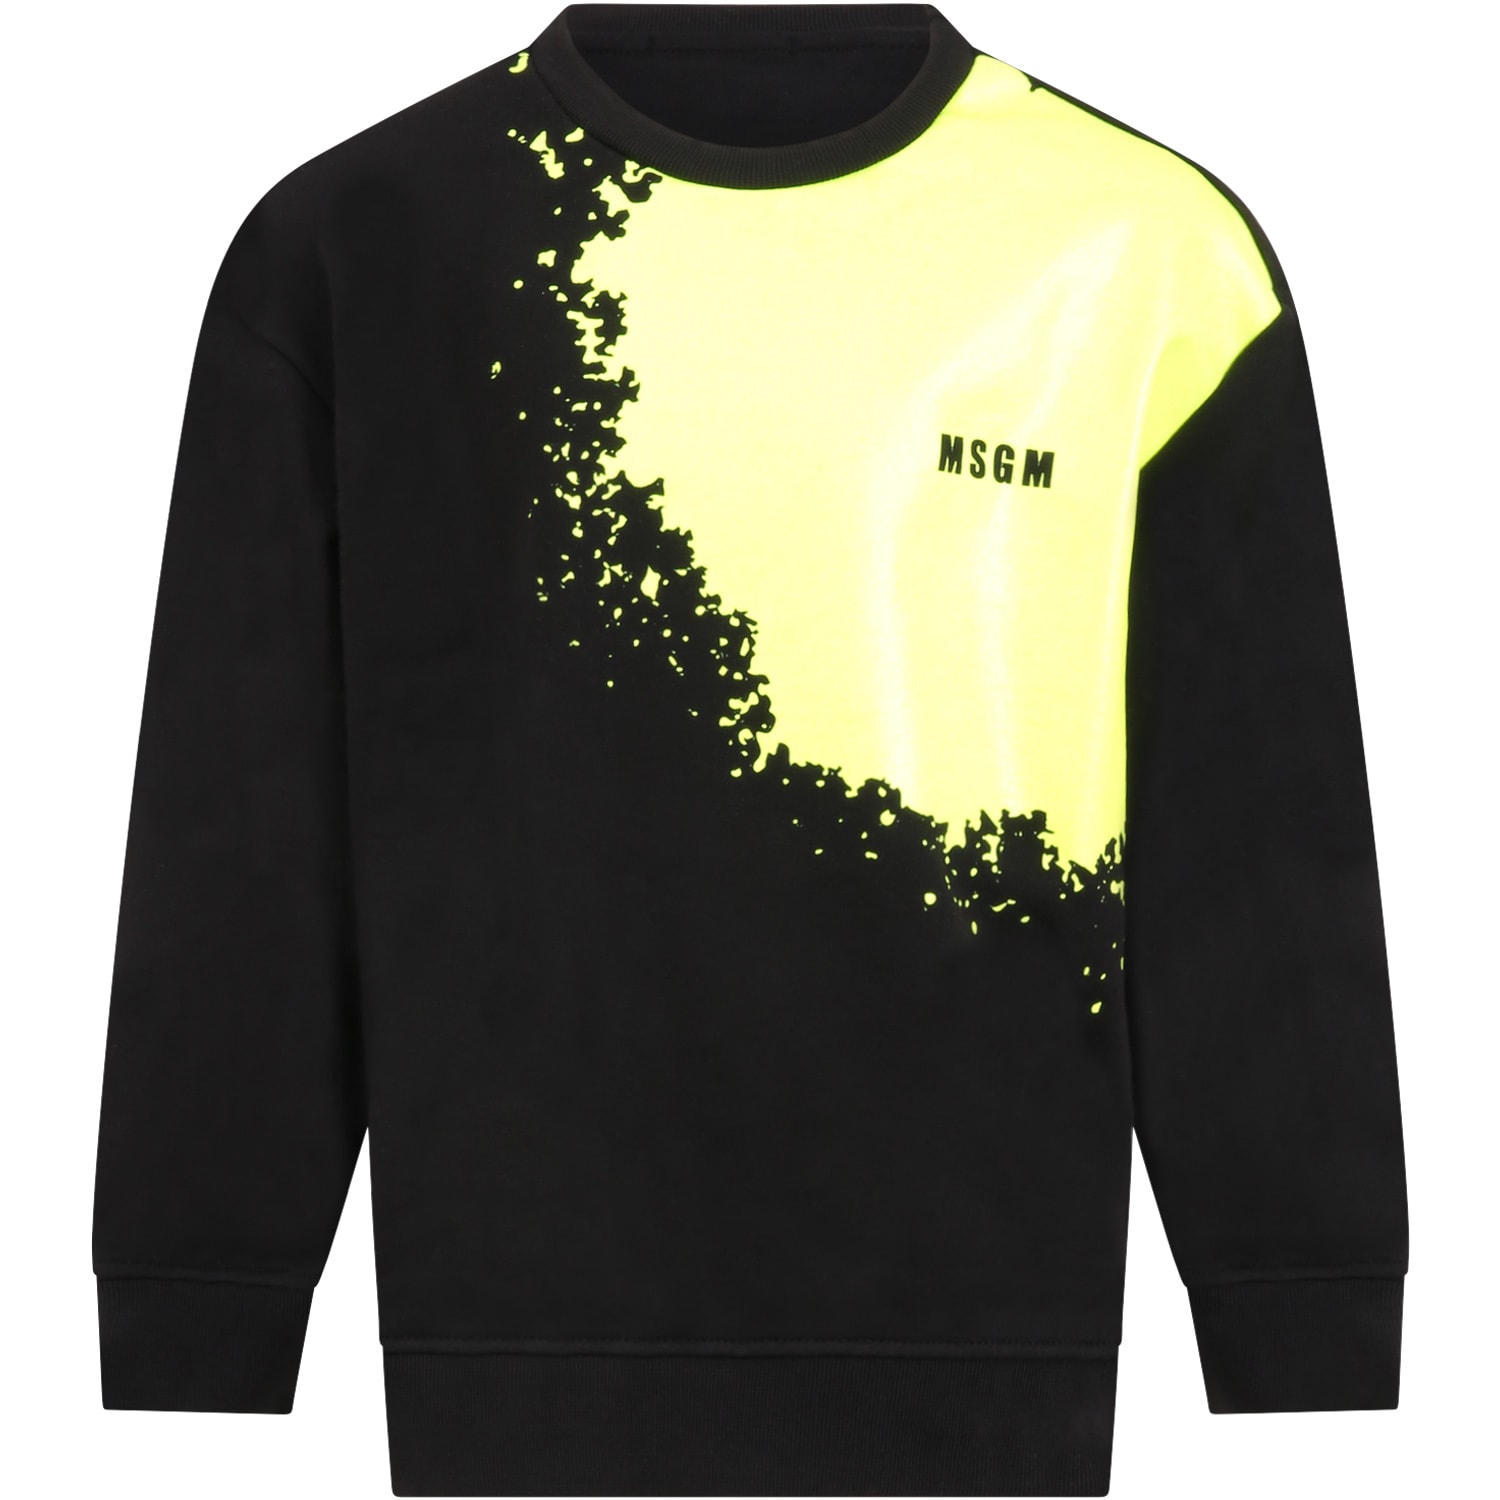 MSGM Black Sweatshirt For Boy With Spot